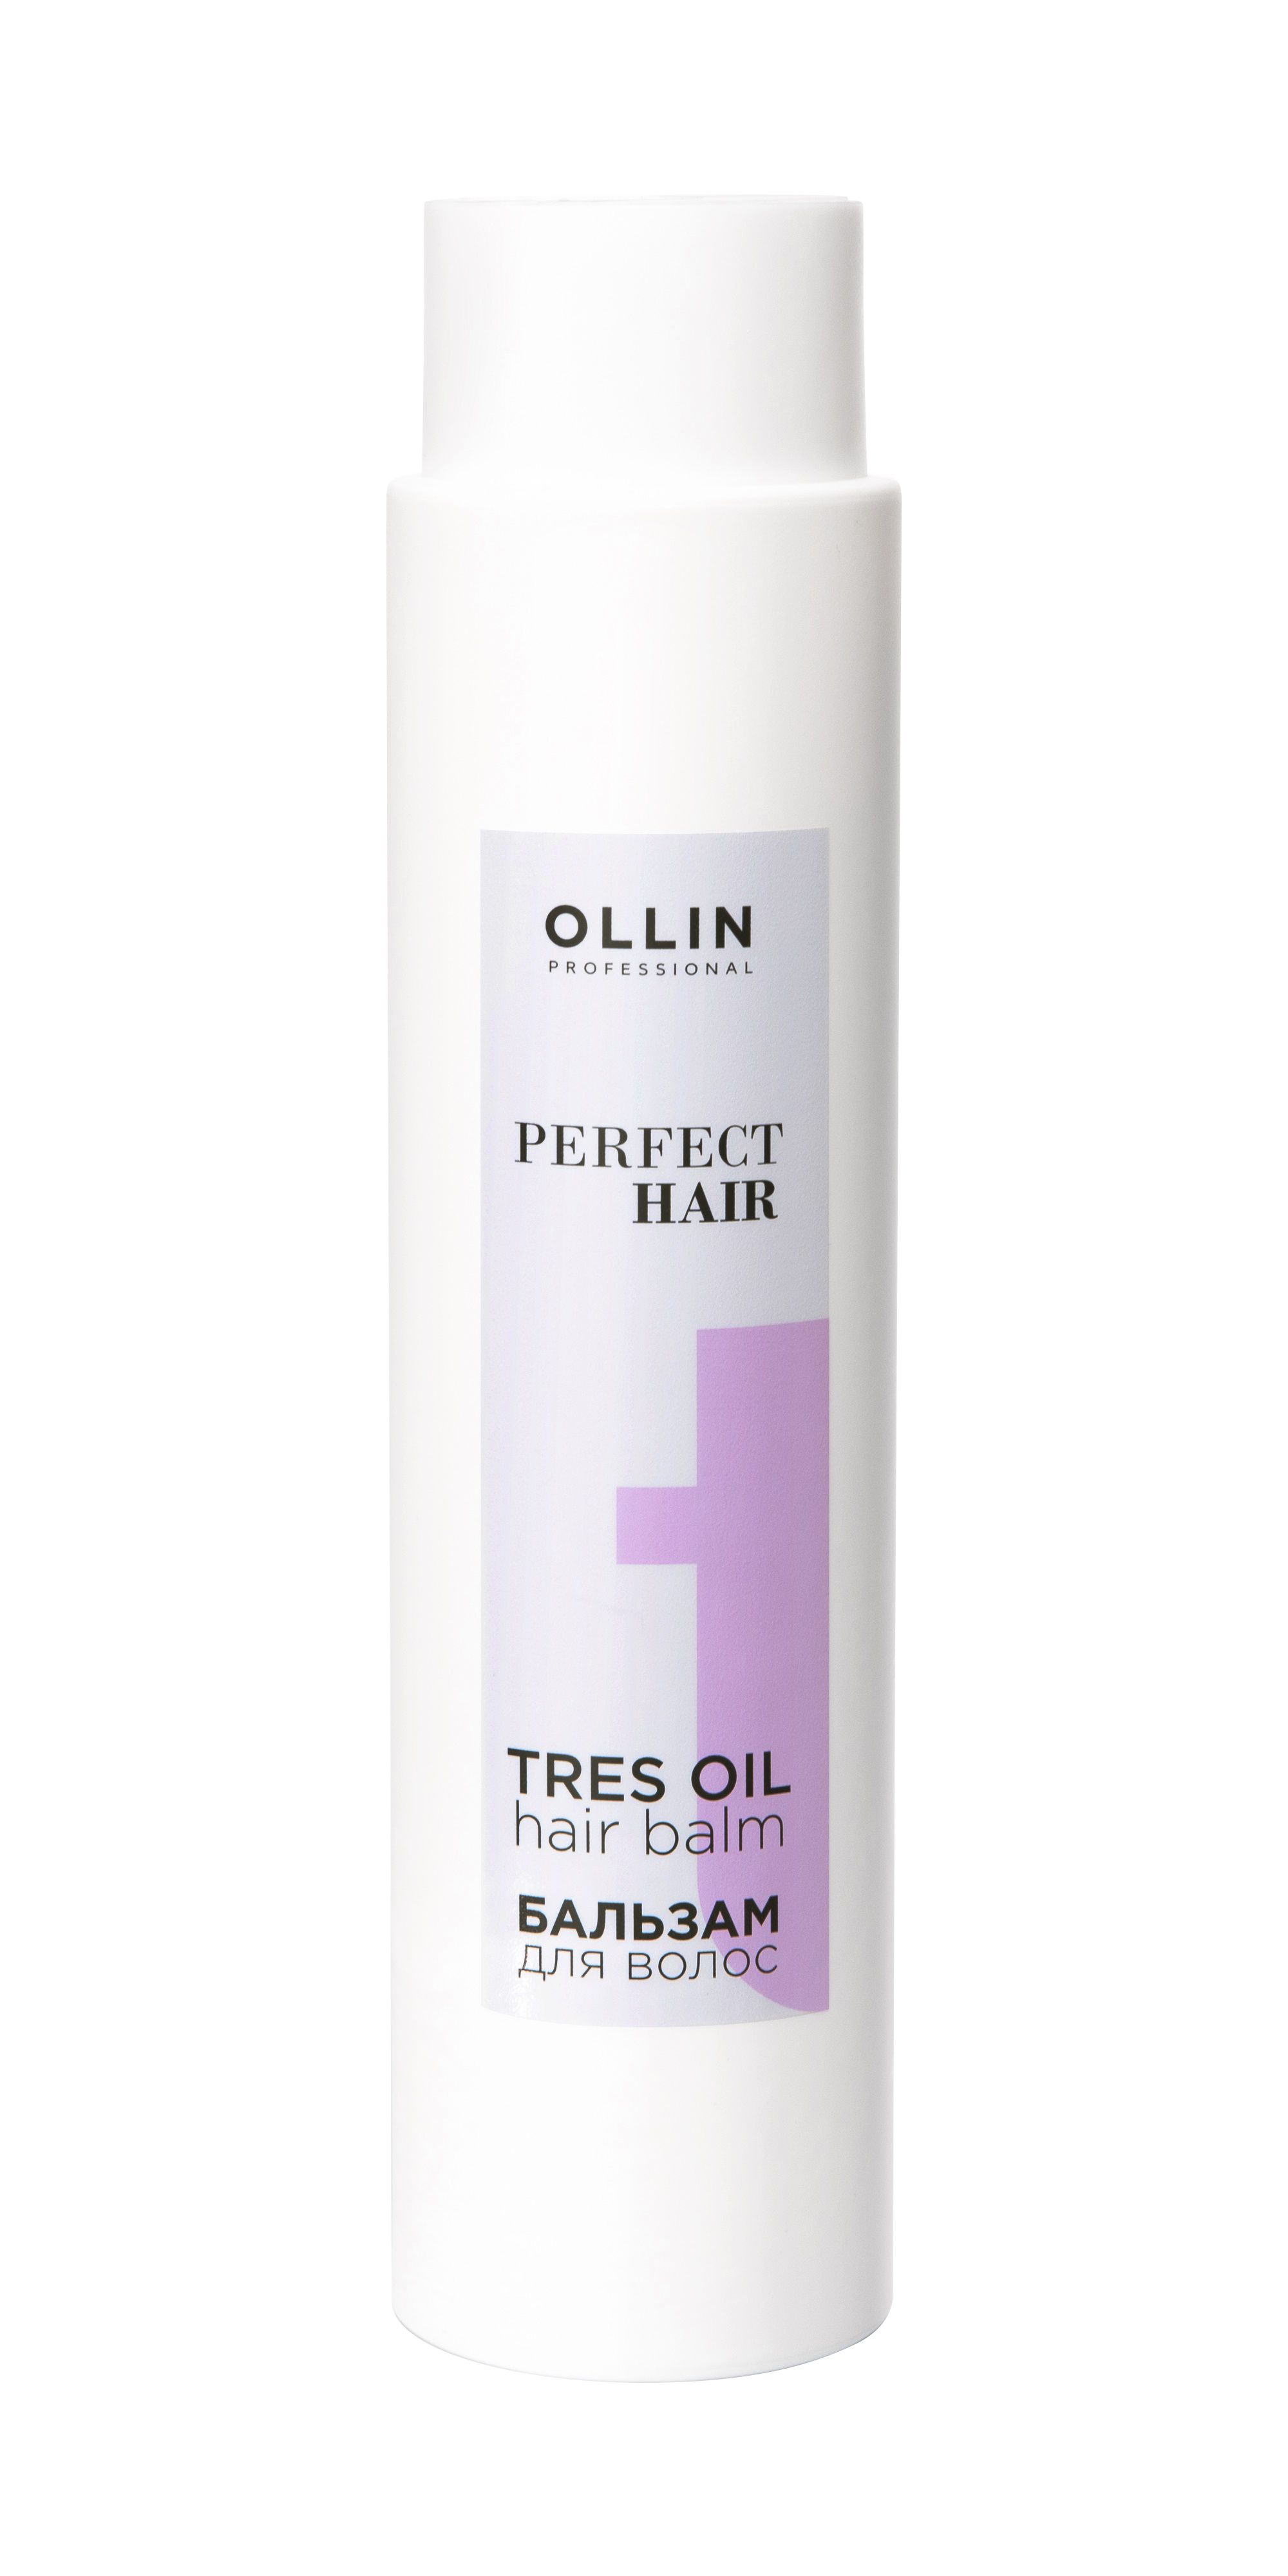 Ollin, Бальзам для волос «Tres Oil» серии «Perfect Hair», Фото интернет-магазин Премиум-Косметика.РФ